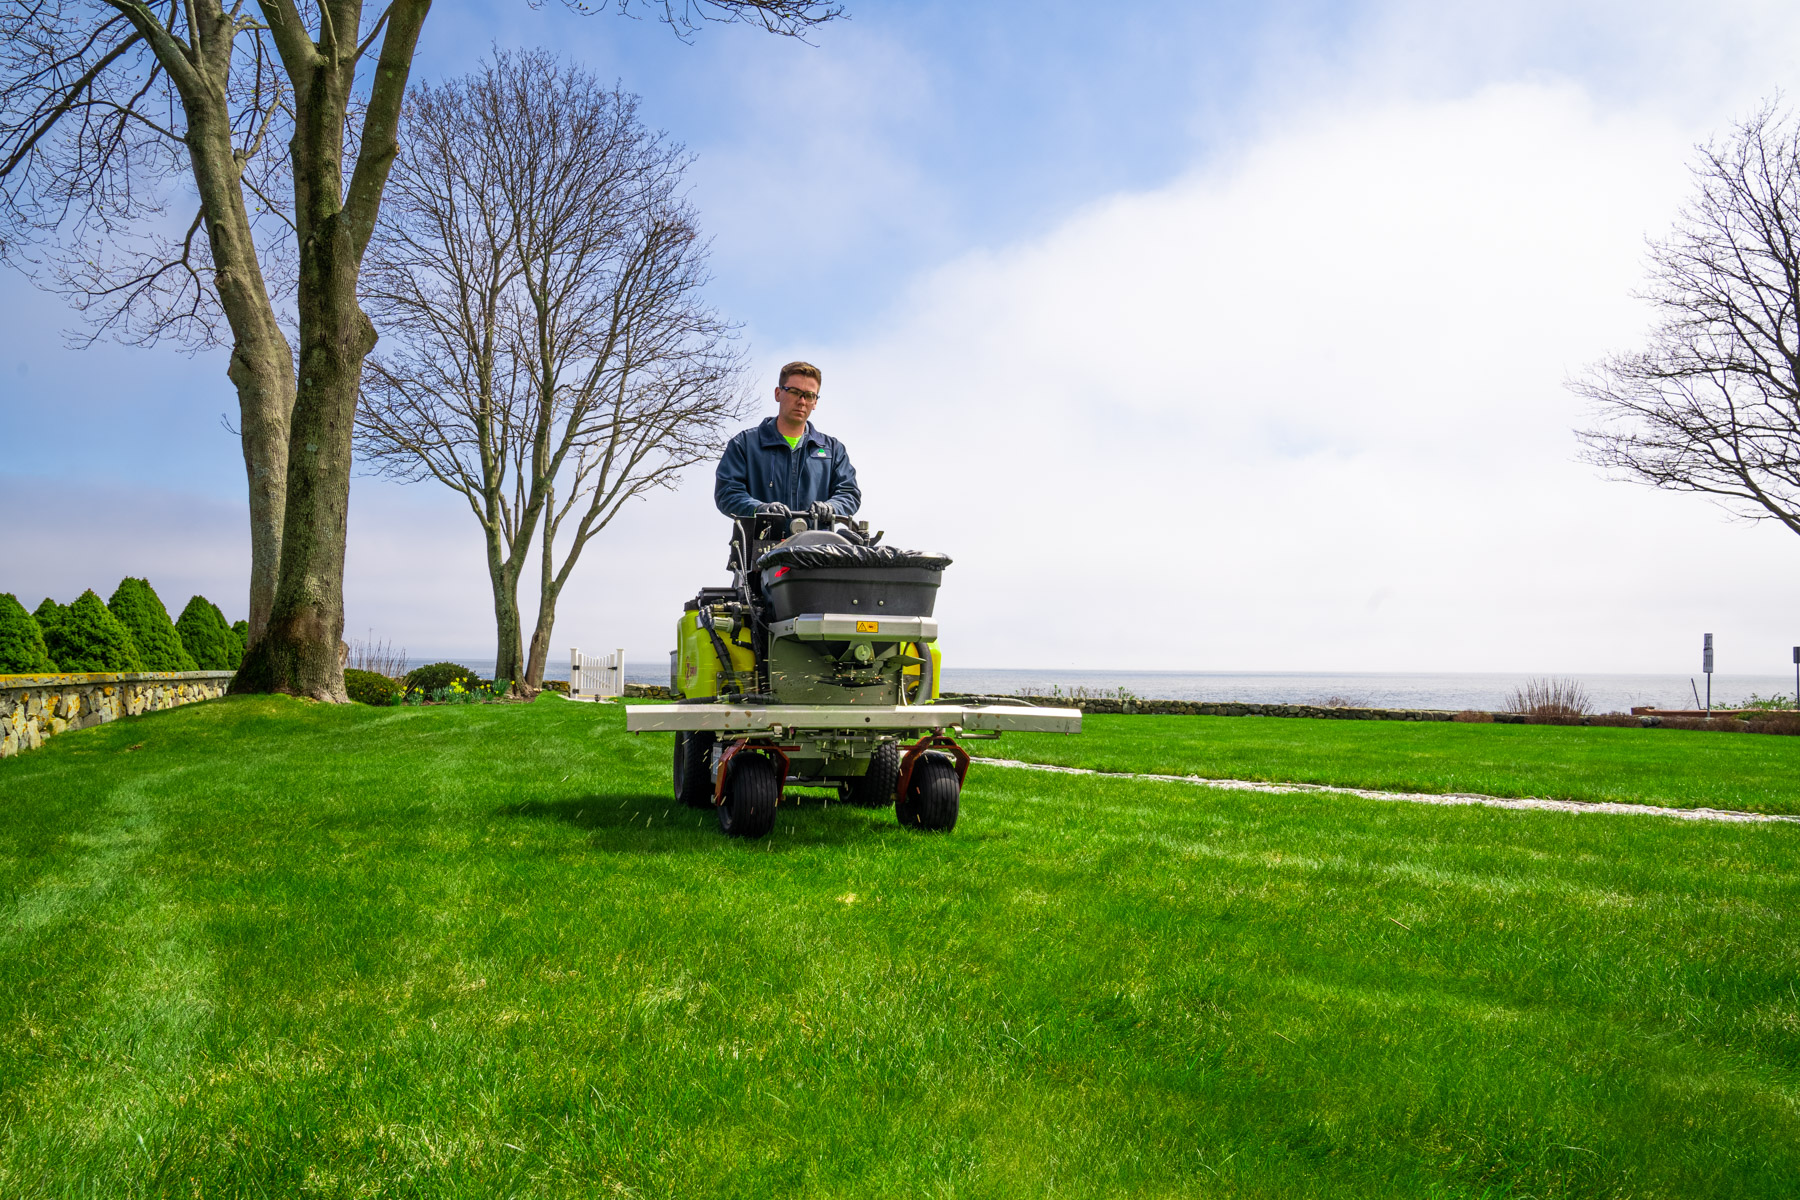 Lawn care technician fertilizing lawn in New England